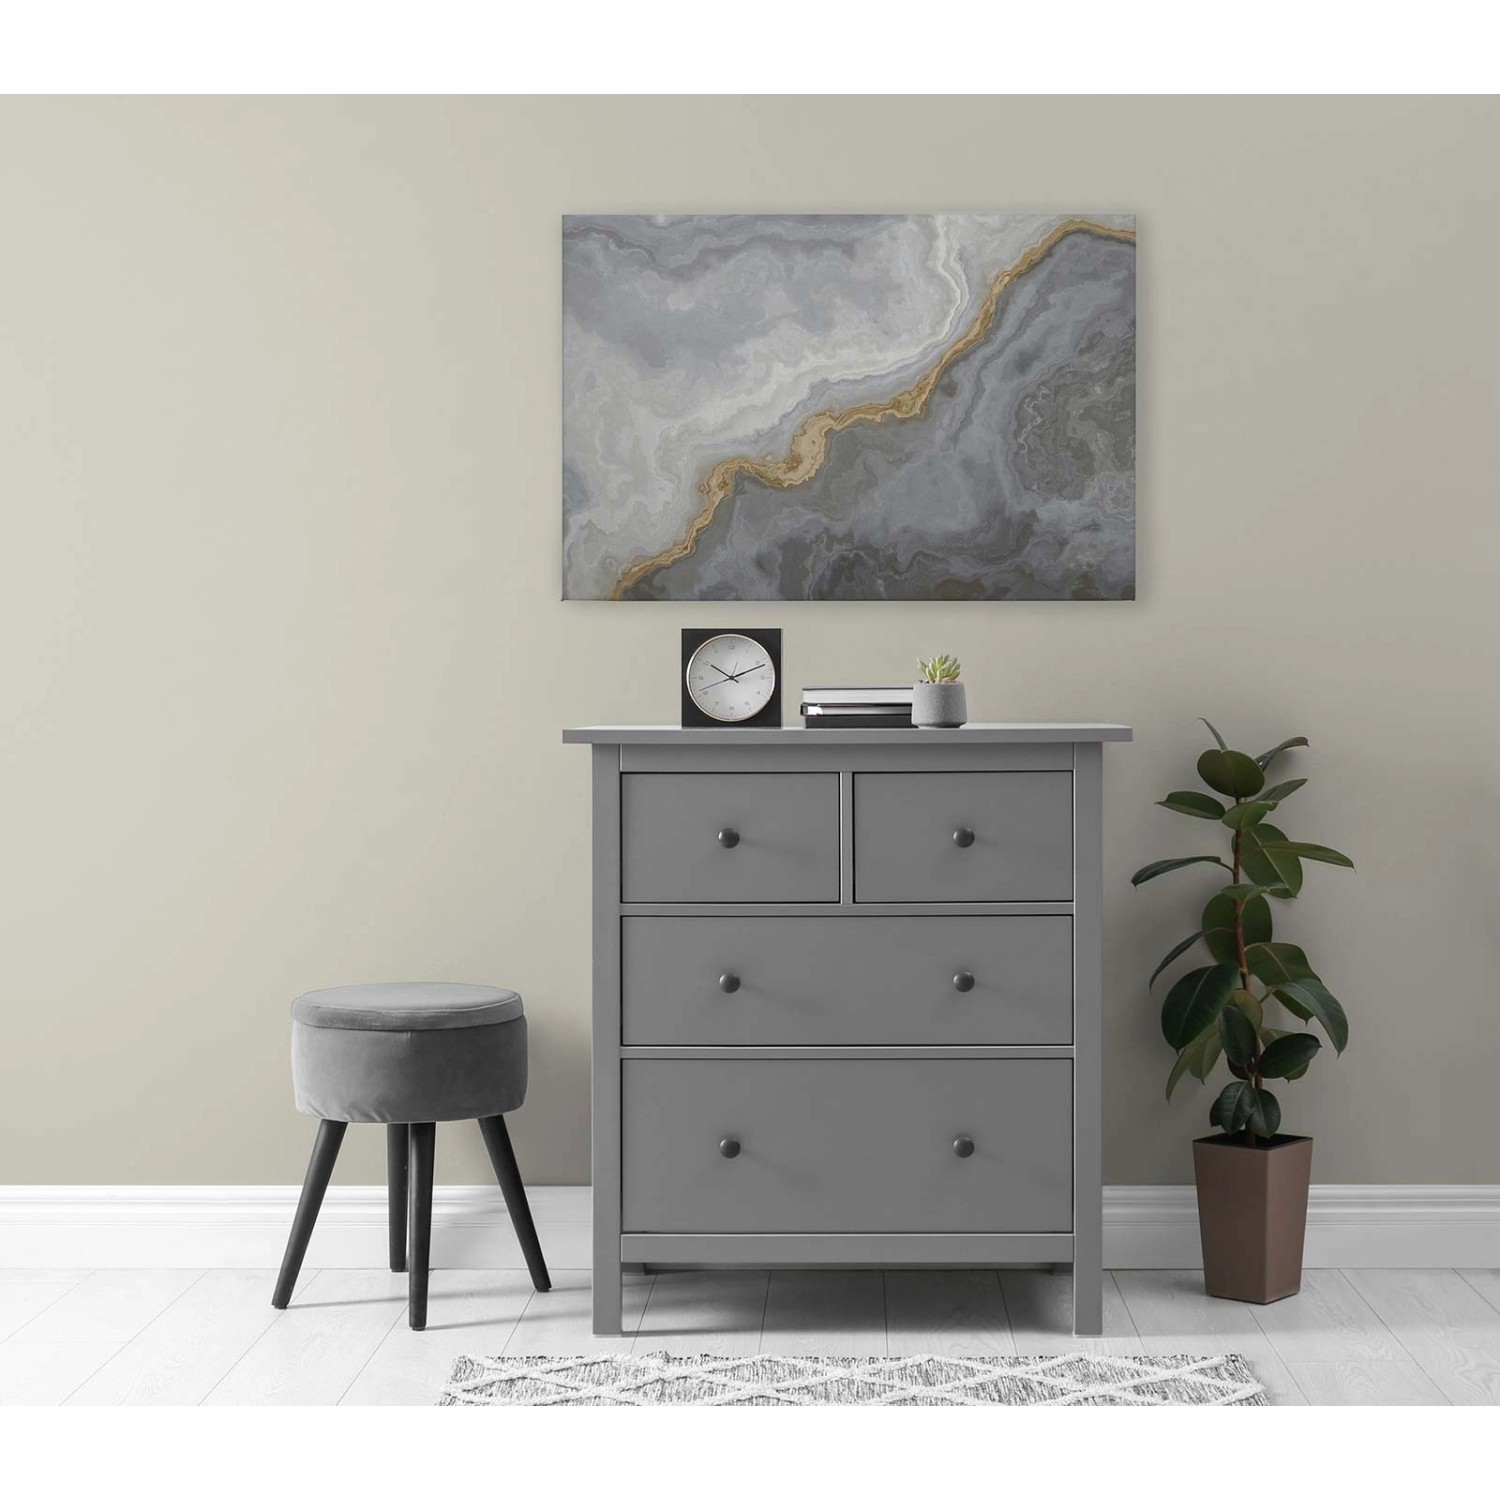 Bricoflor Leinwandbild Marmor Gold Grau Deko Bild Elegant Ideal Für Schlafzimmer Und Büro Graues Wandbild Marmoroptik 12